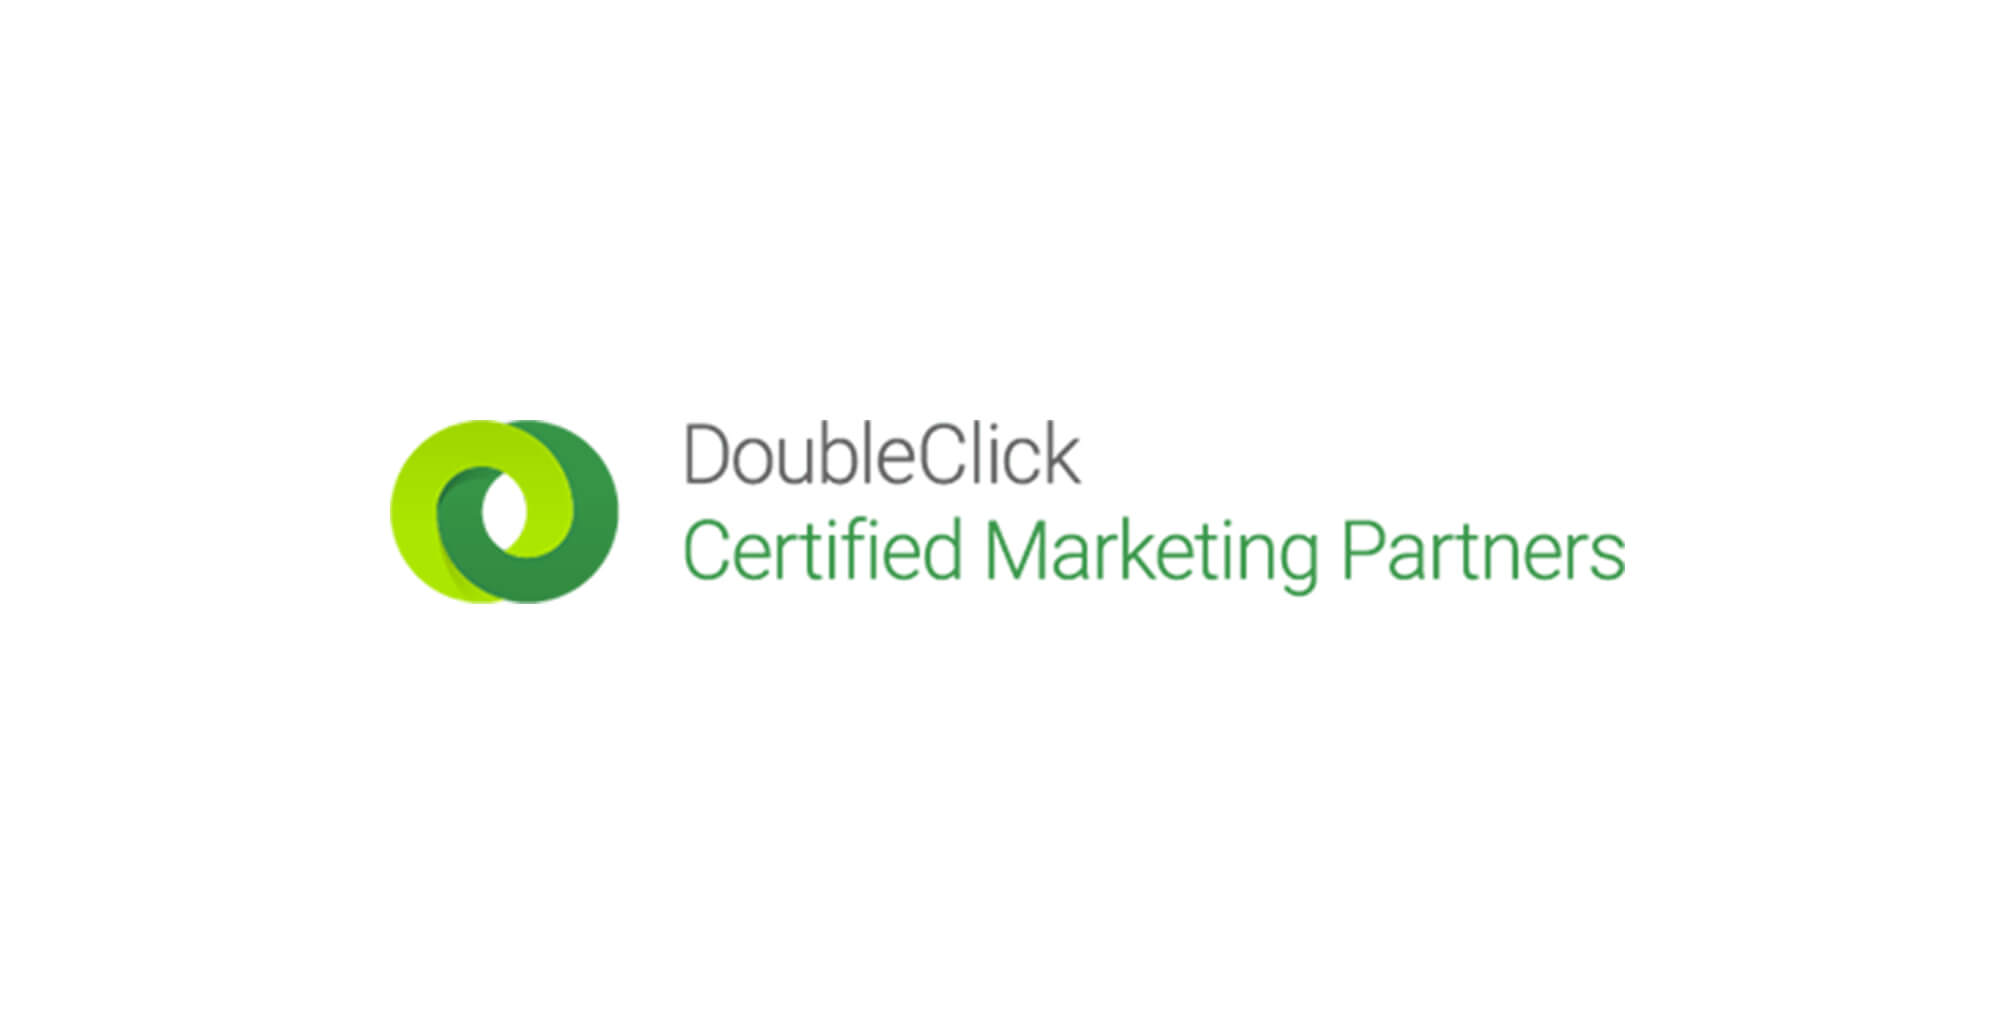 DoubleClick reconoce como Certified Marketing Partner a Mentalidad Web